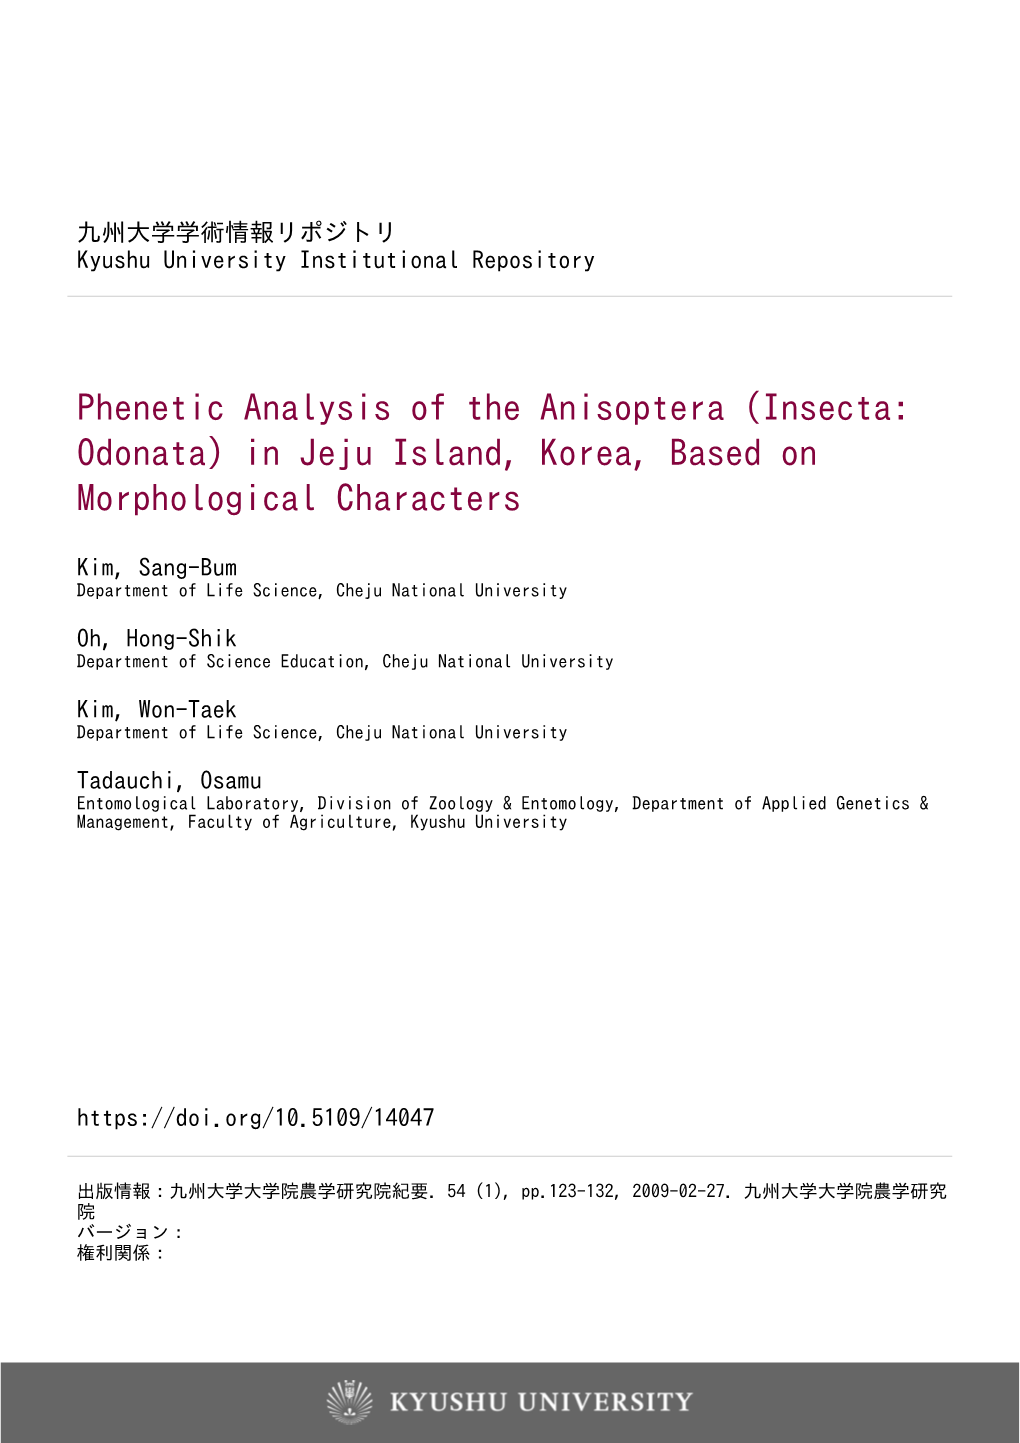 Phenetic Analysis of the Anisoptera (Insecta: Odonata) in Jeju Island, Korea, Based on Morphological Characters